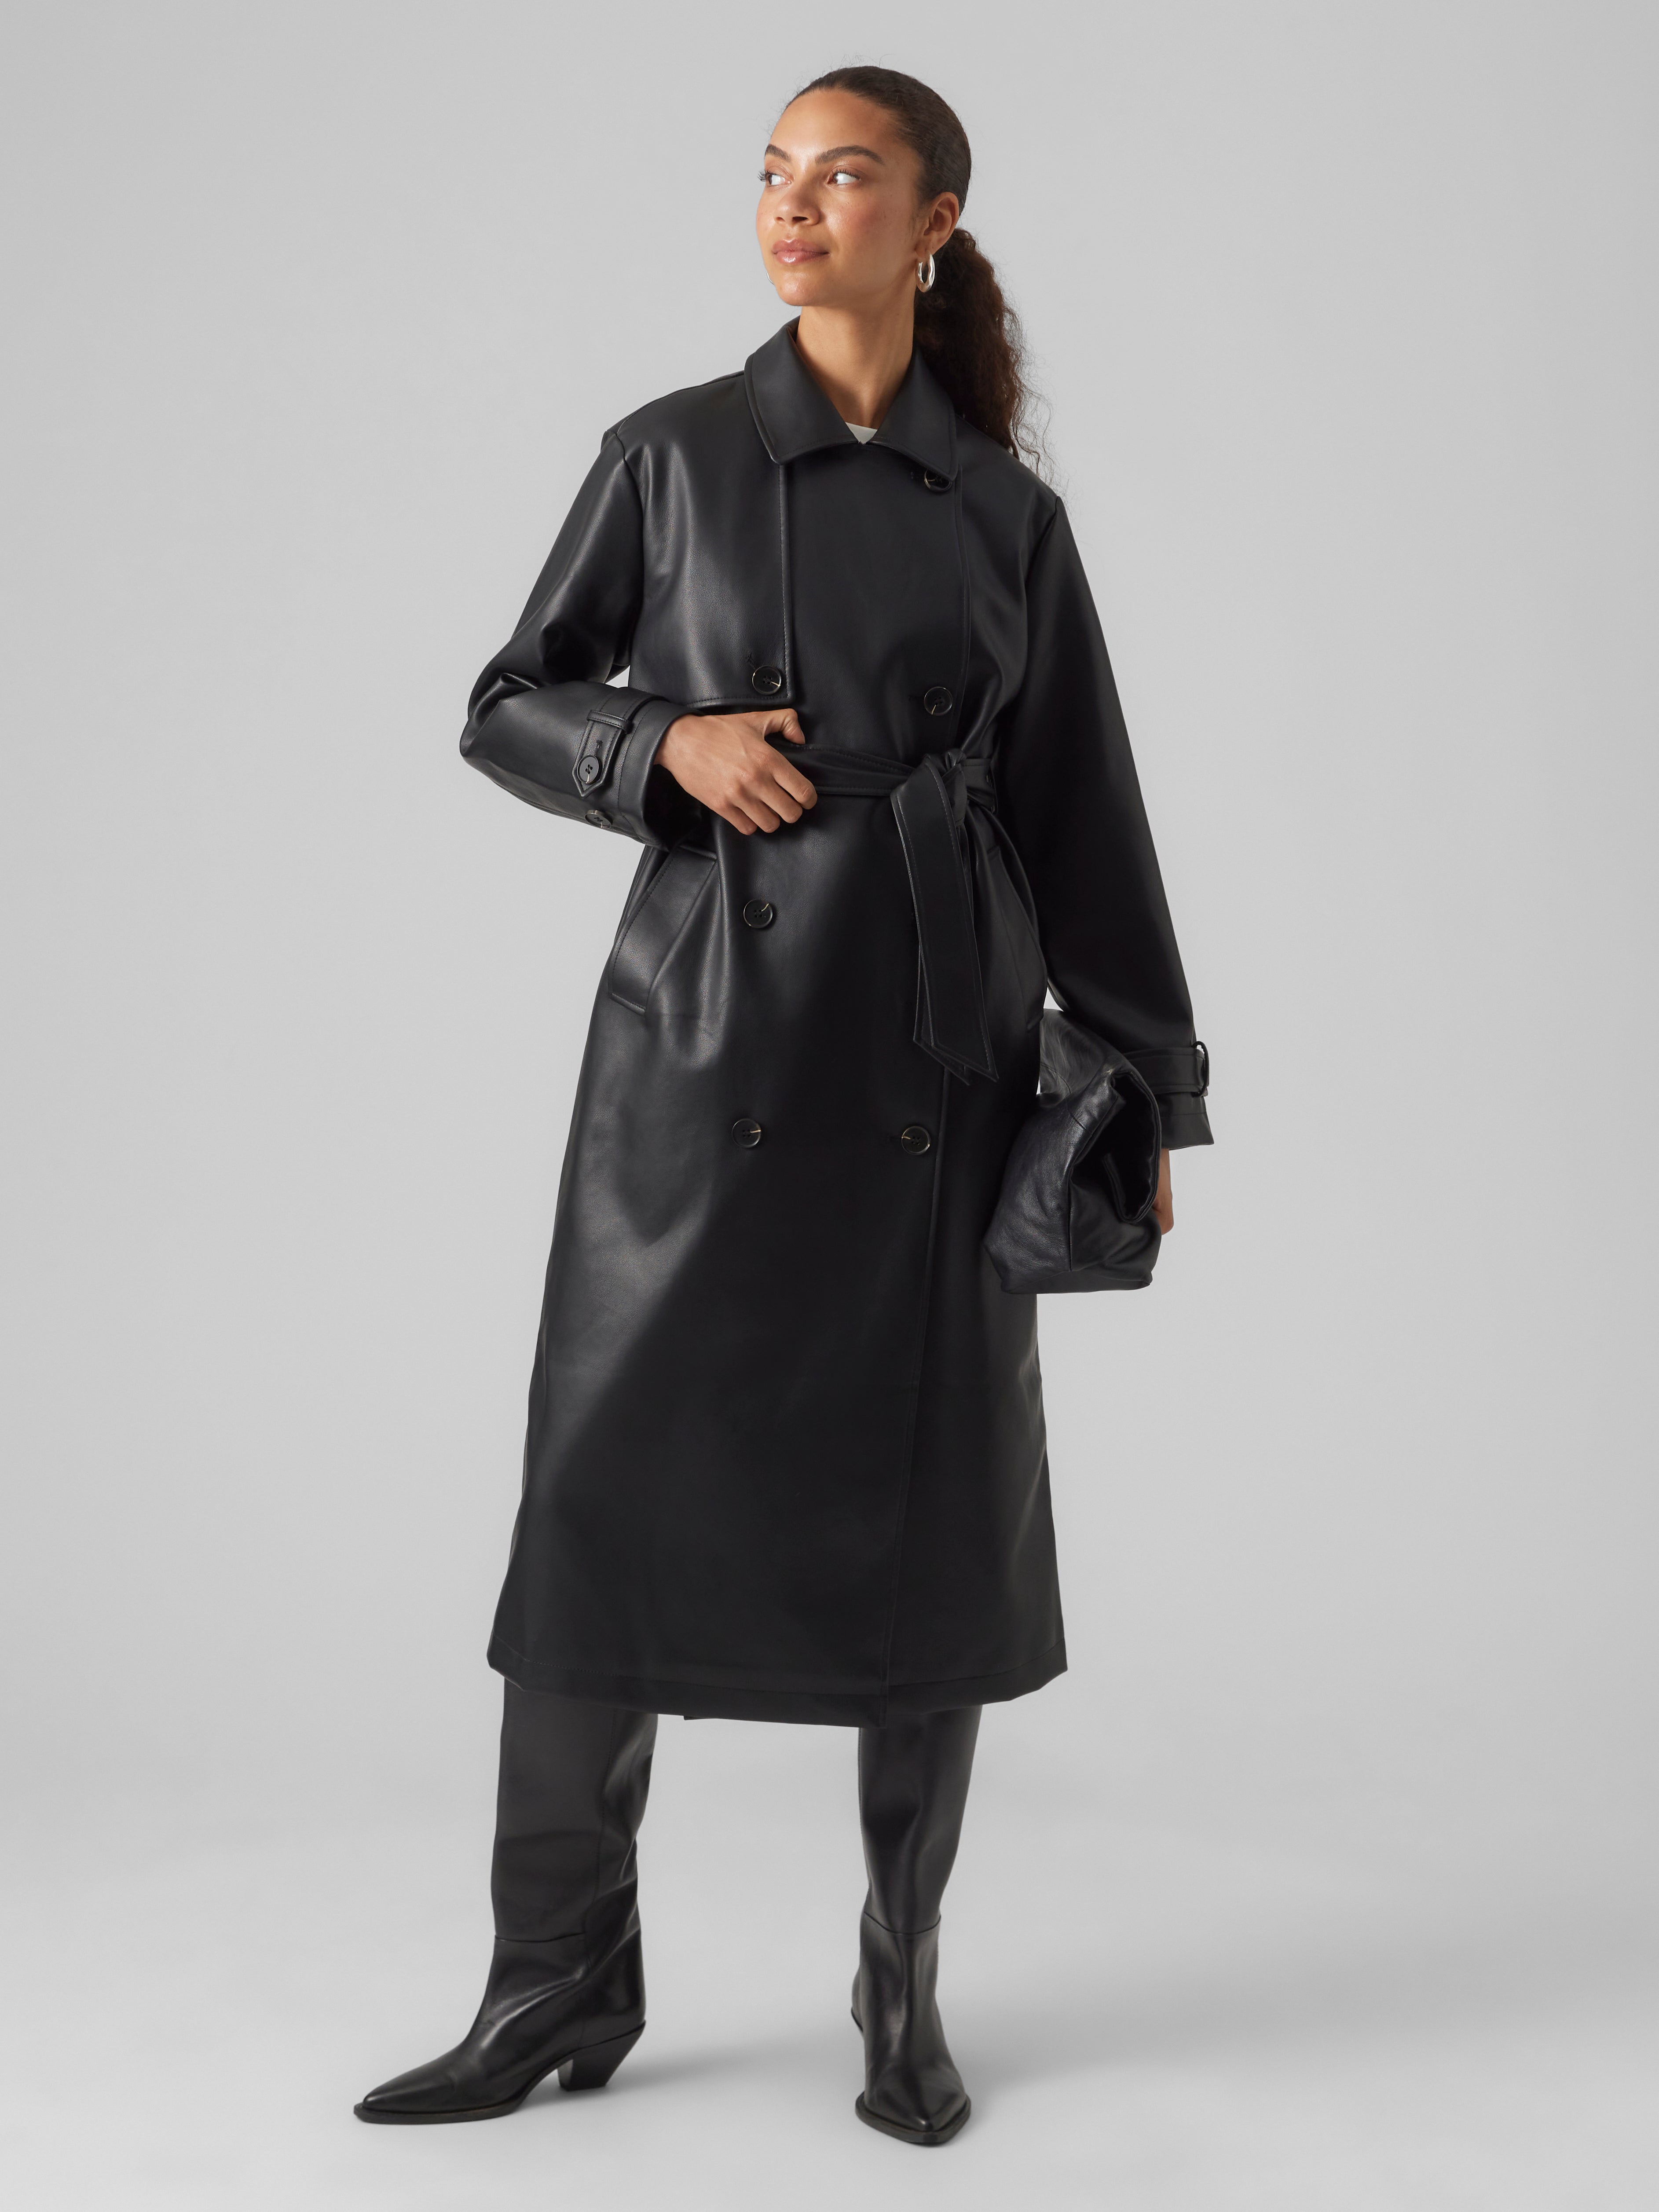 VMALMA Coat | Black Moda® Vero 